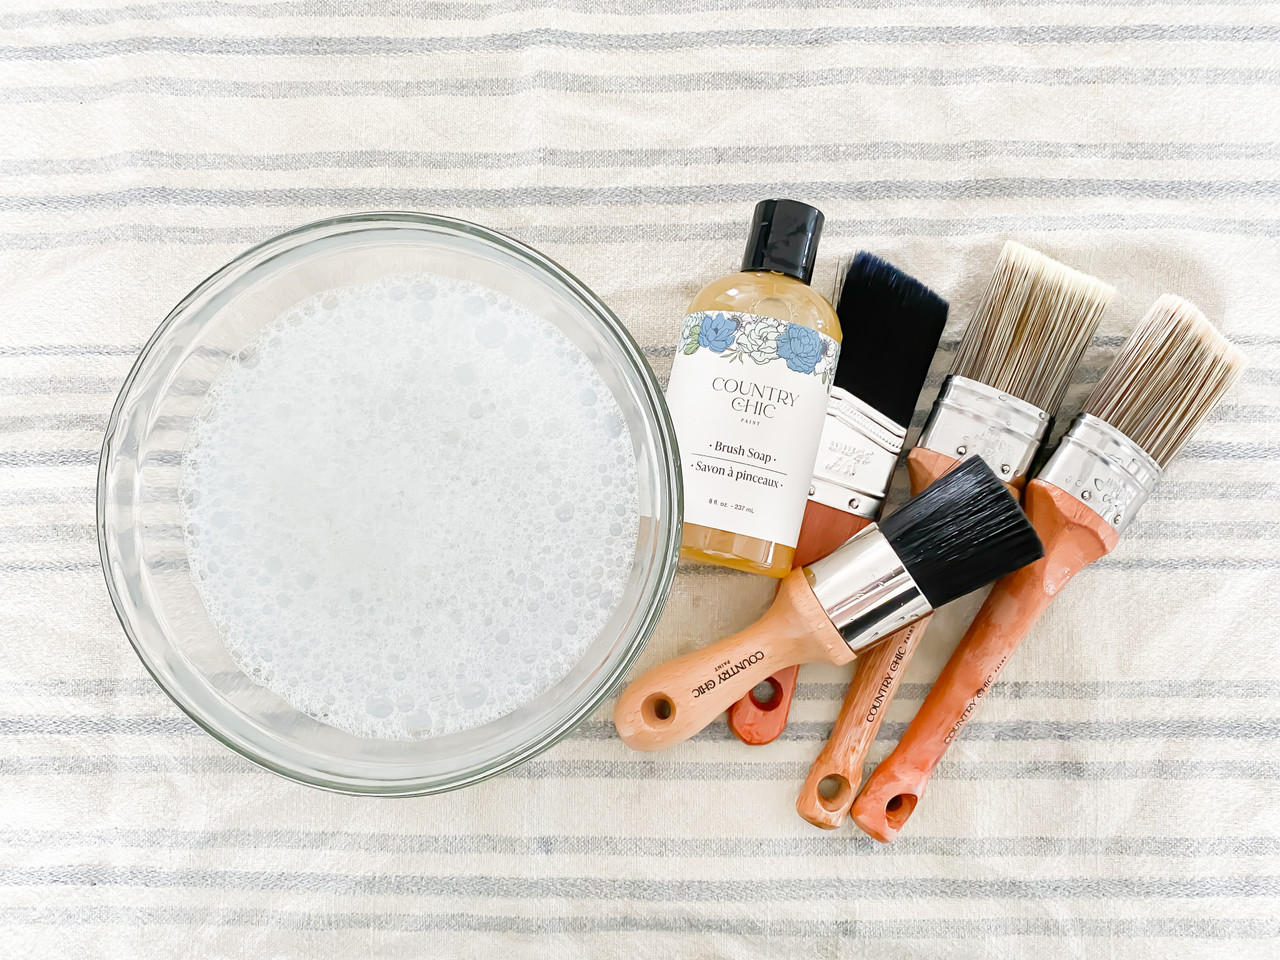 TRITART 100% Vegan Paint Brush Cleaner Soap for Makeup Watercolor & Acrylic Paint  Brushes - Lemon Scented Paint Soap for Cleaning Oil Paint Brushes